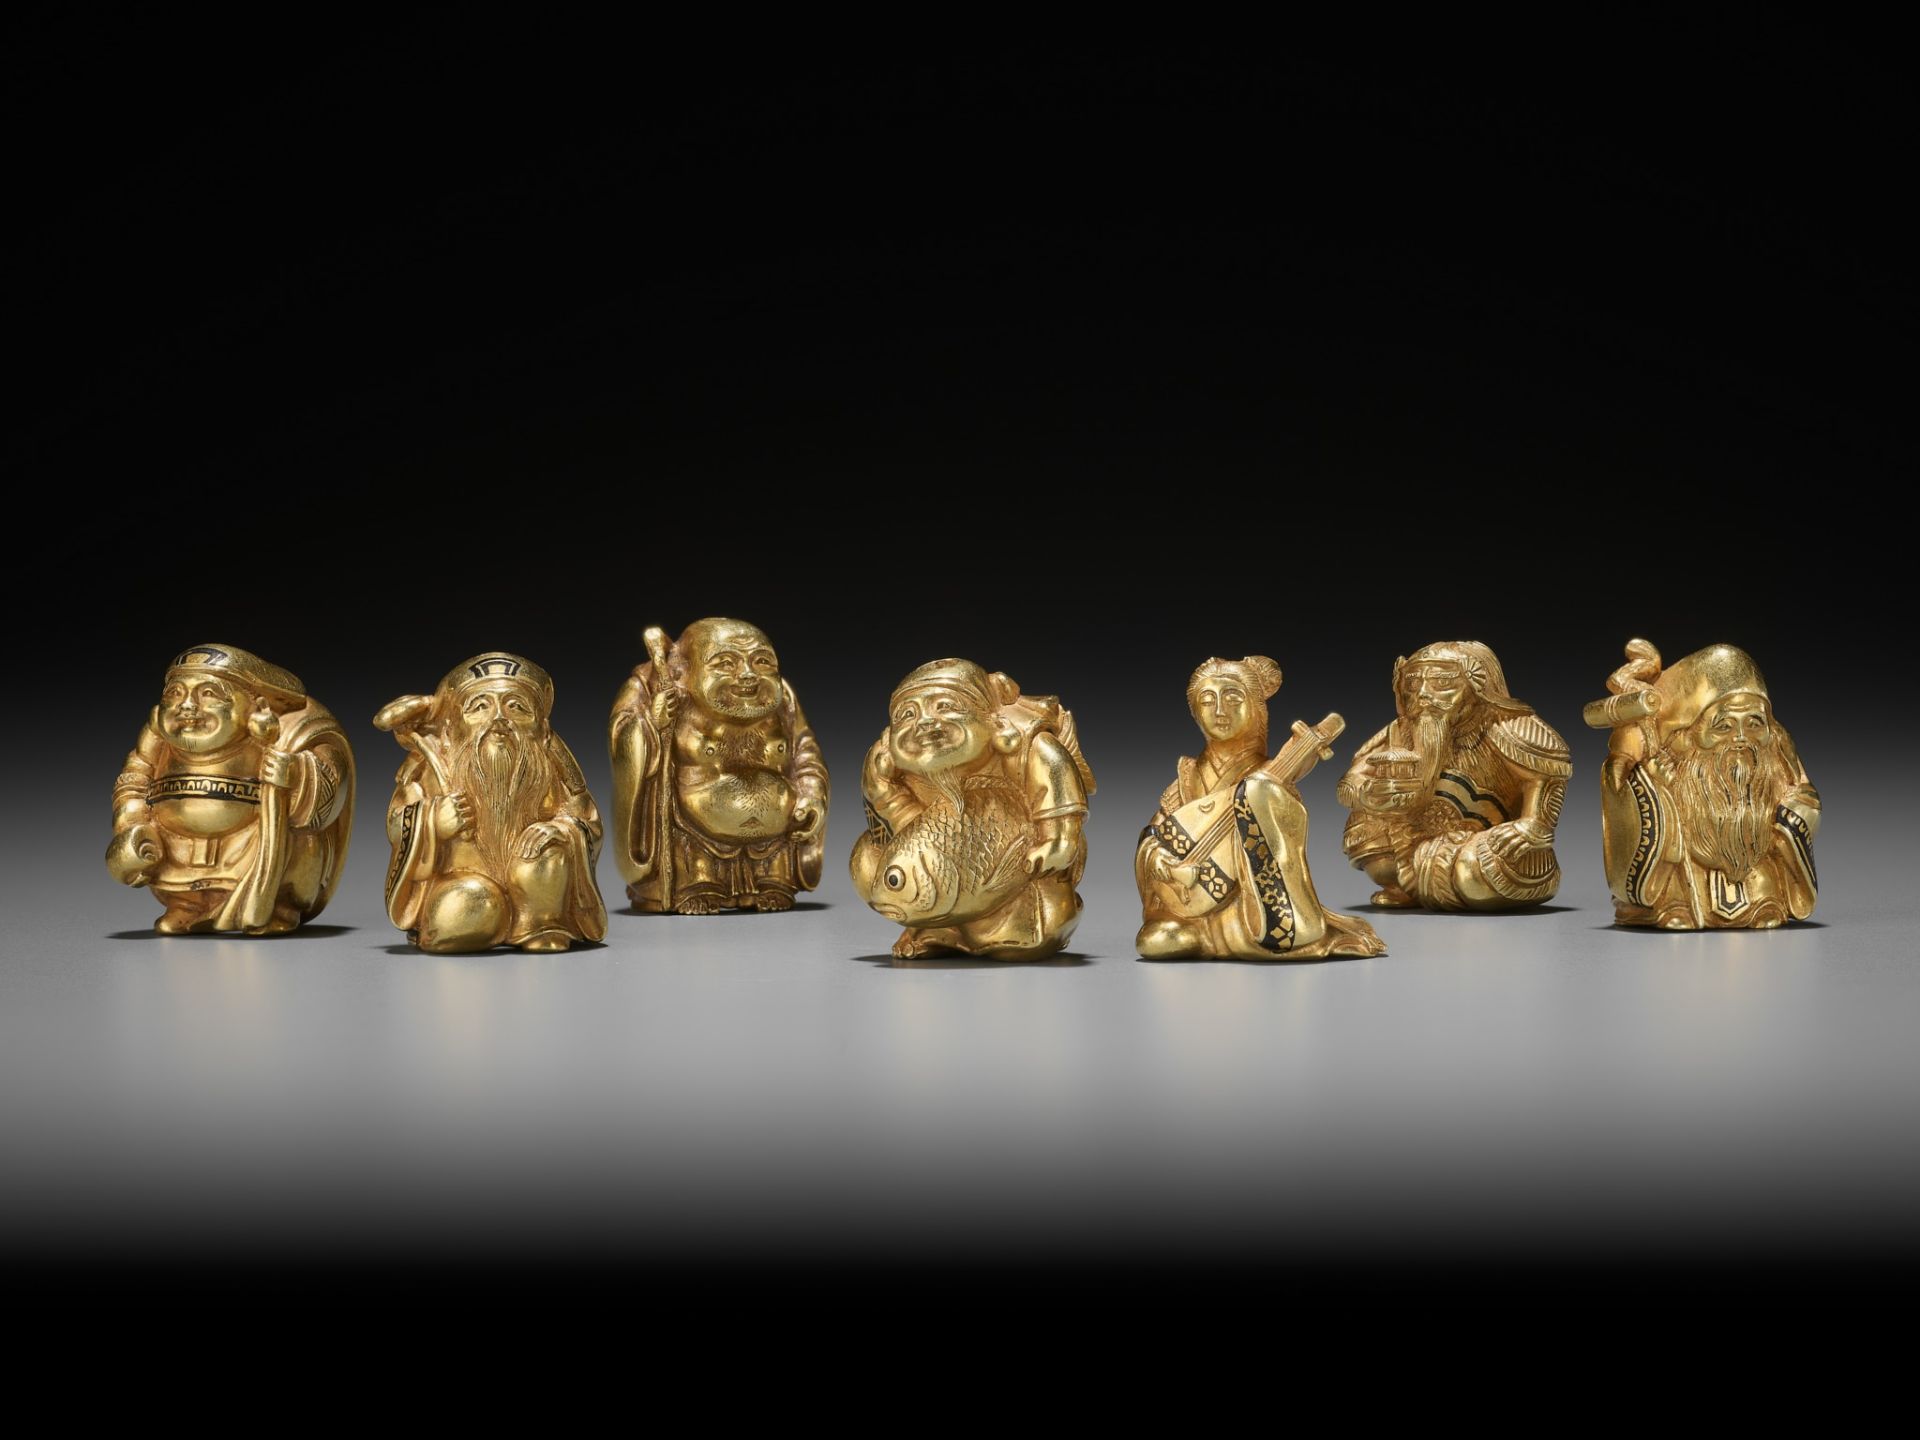 TAKACHIKA: A VERY RARE SOLID GOLD OJIME SET OF THE SEVEN LUCKY GODS (SHICHIFUKUJIN)